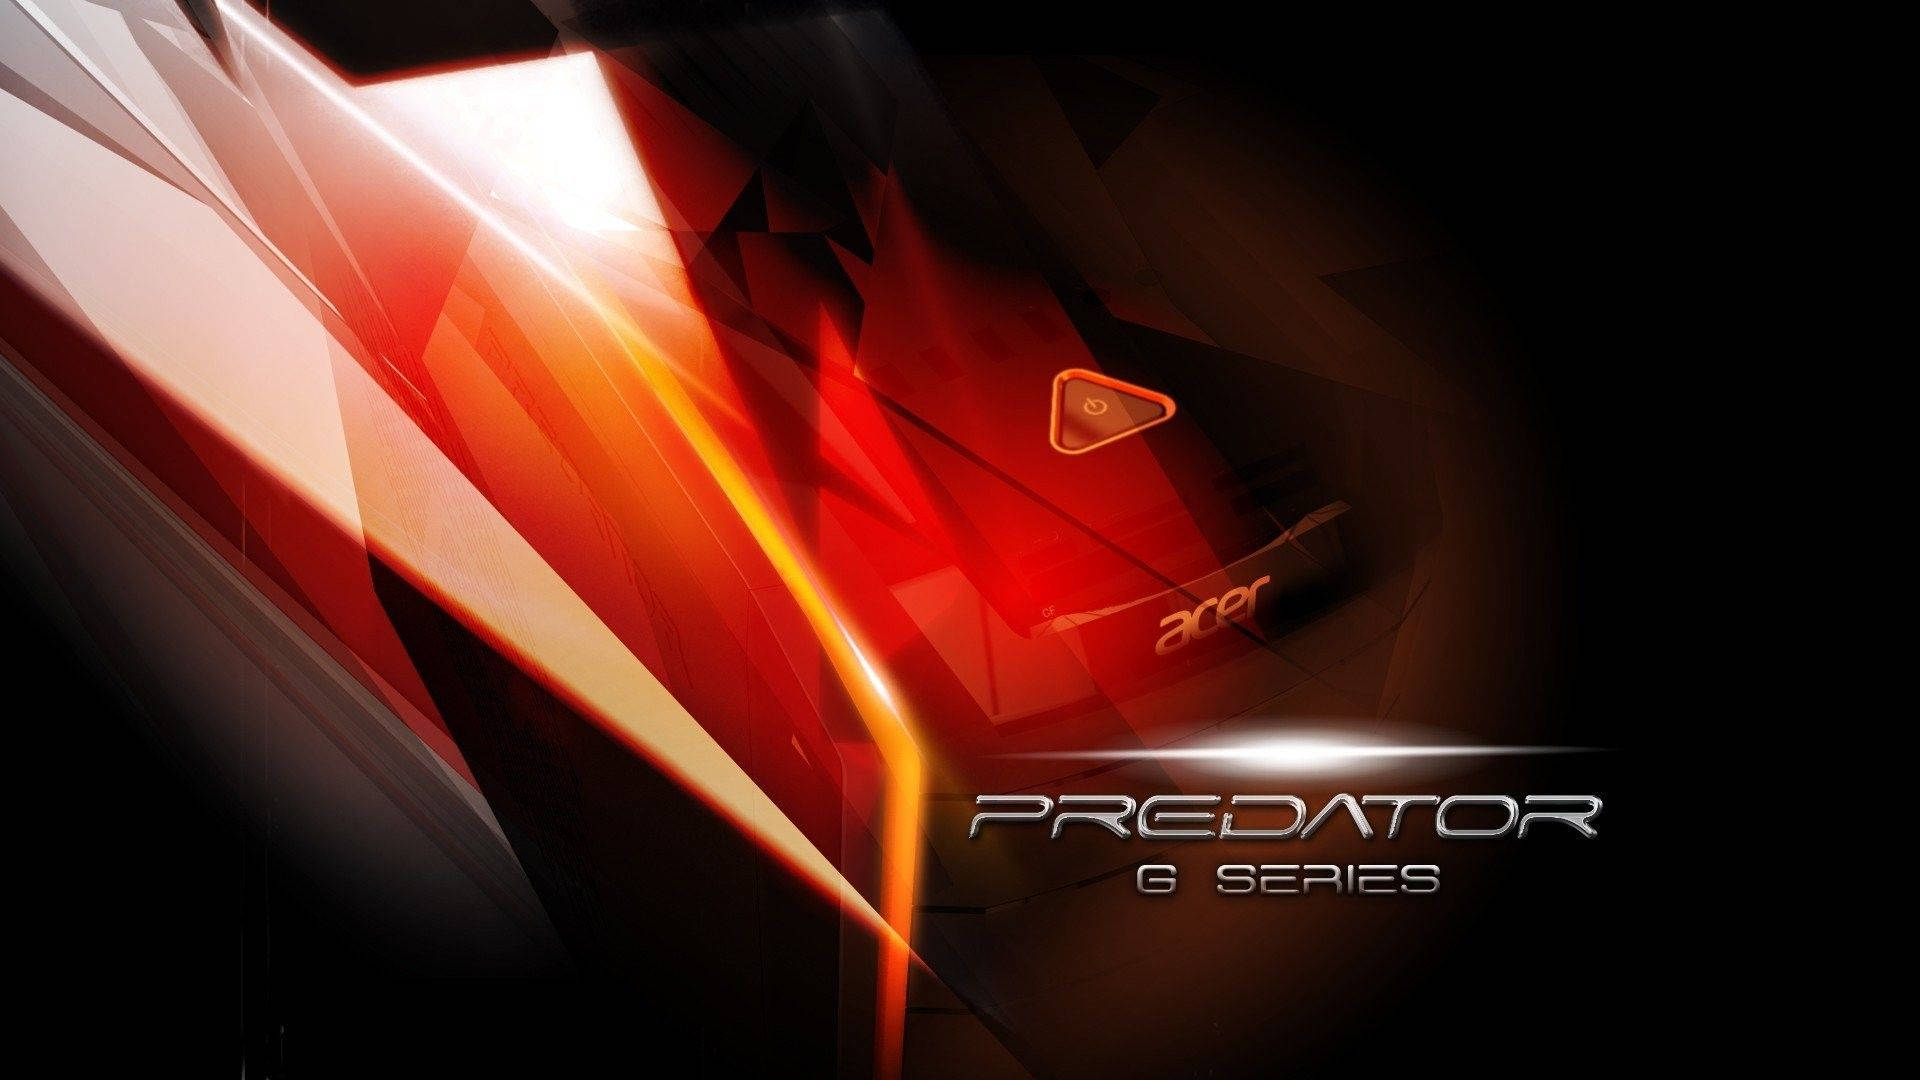 Red Acer Predator G Series Wallpaper